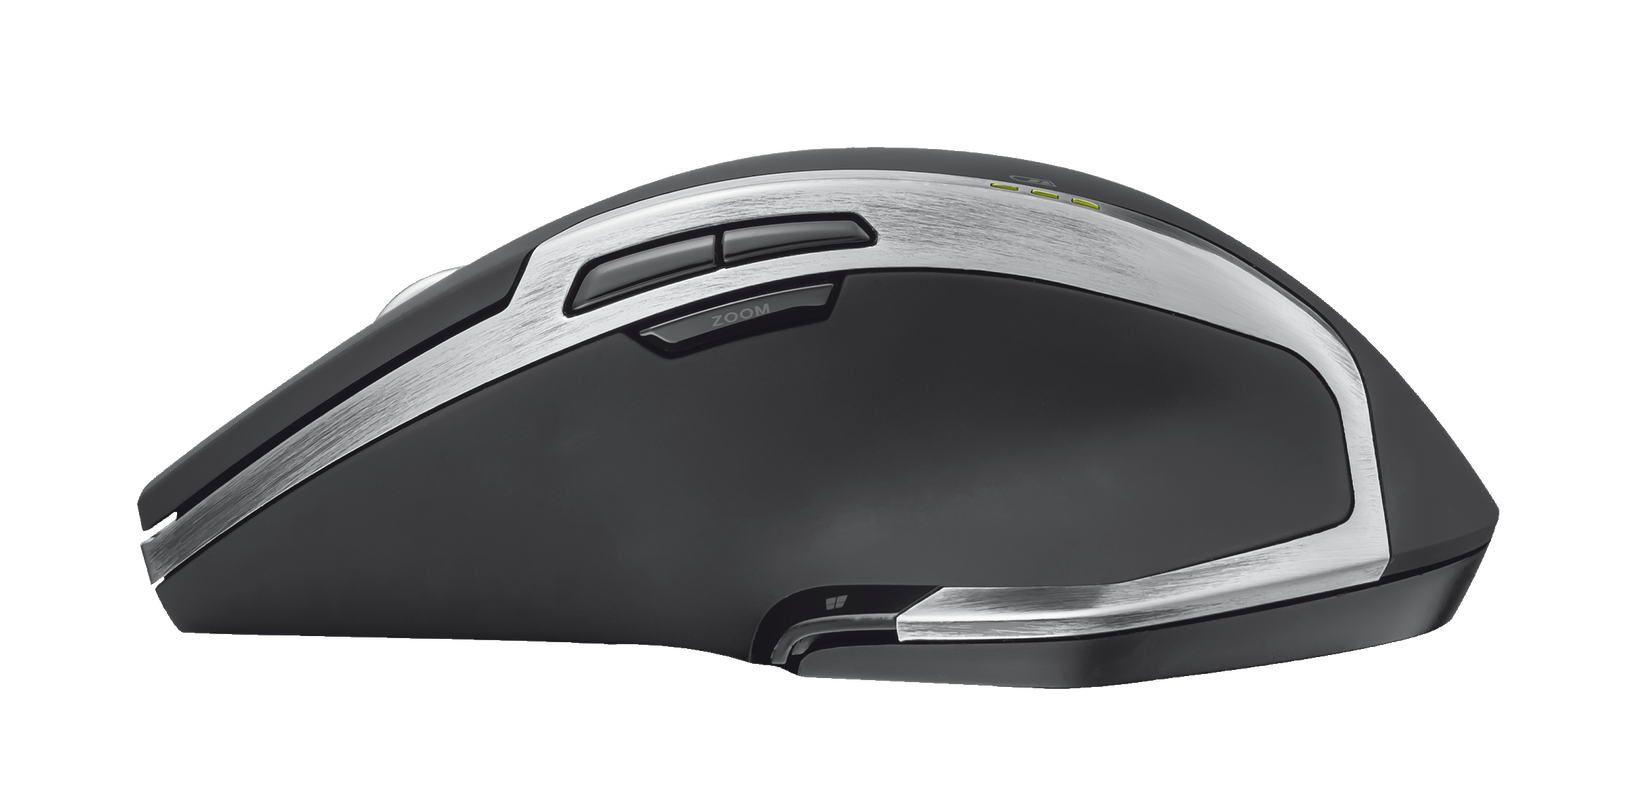 Evo Advanced Wireless Laser Mouse-Side